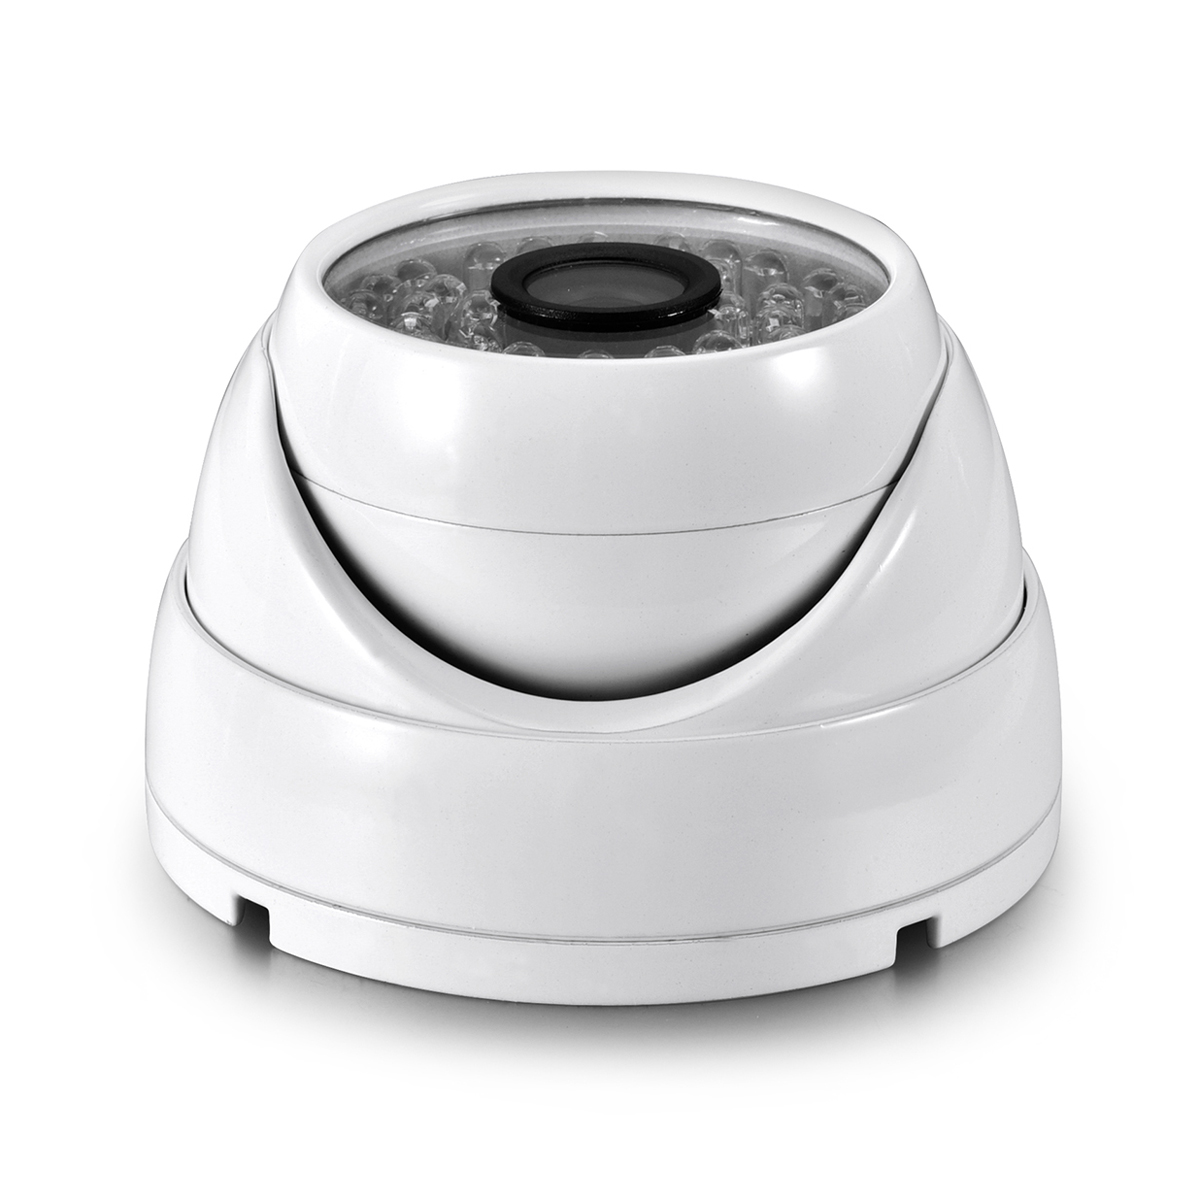 Gadinan IP Camera 3MP 1080P H.265 SONY IMX307 Anti Vandal Dome Camera Outdoor Indoor Surveillance ONVIF 2.0 48V PoE CCTV